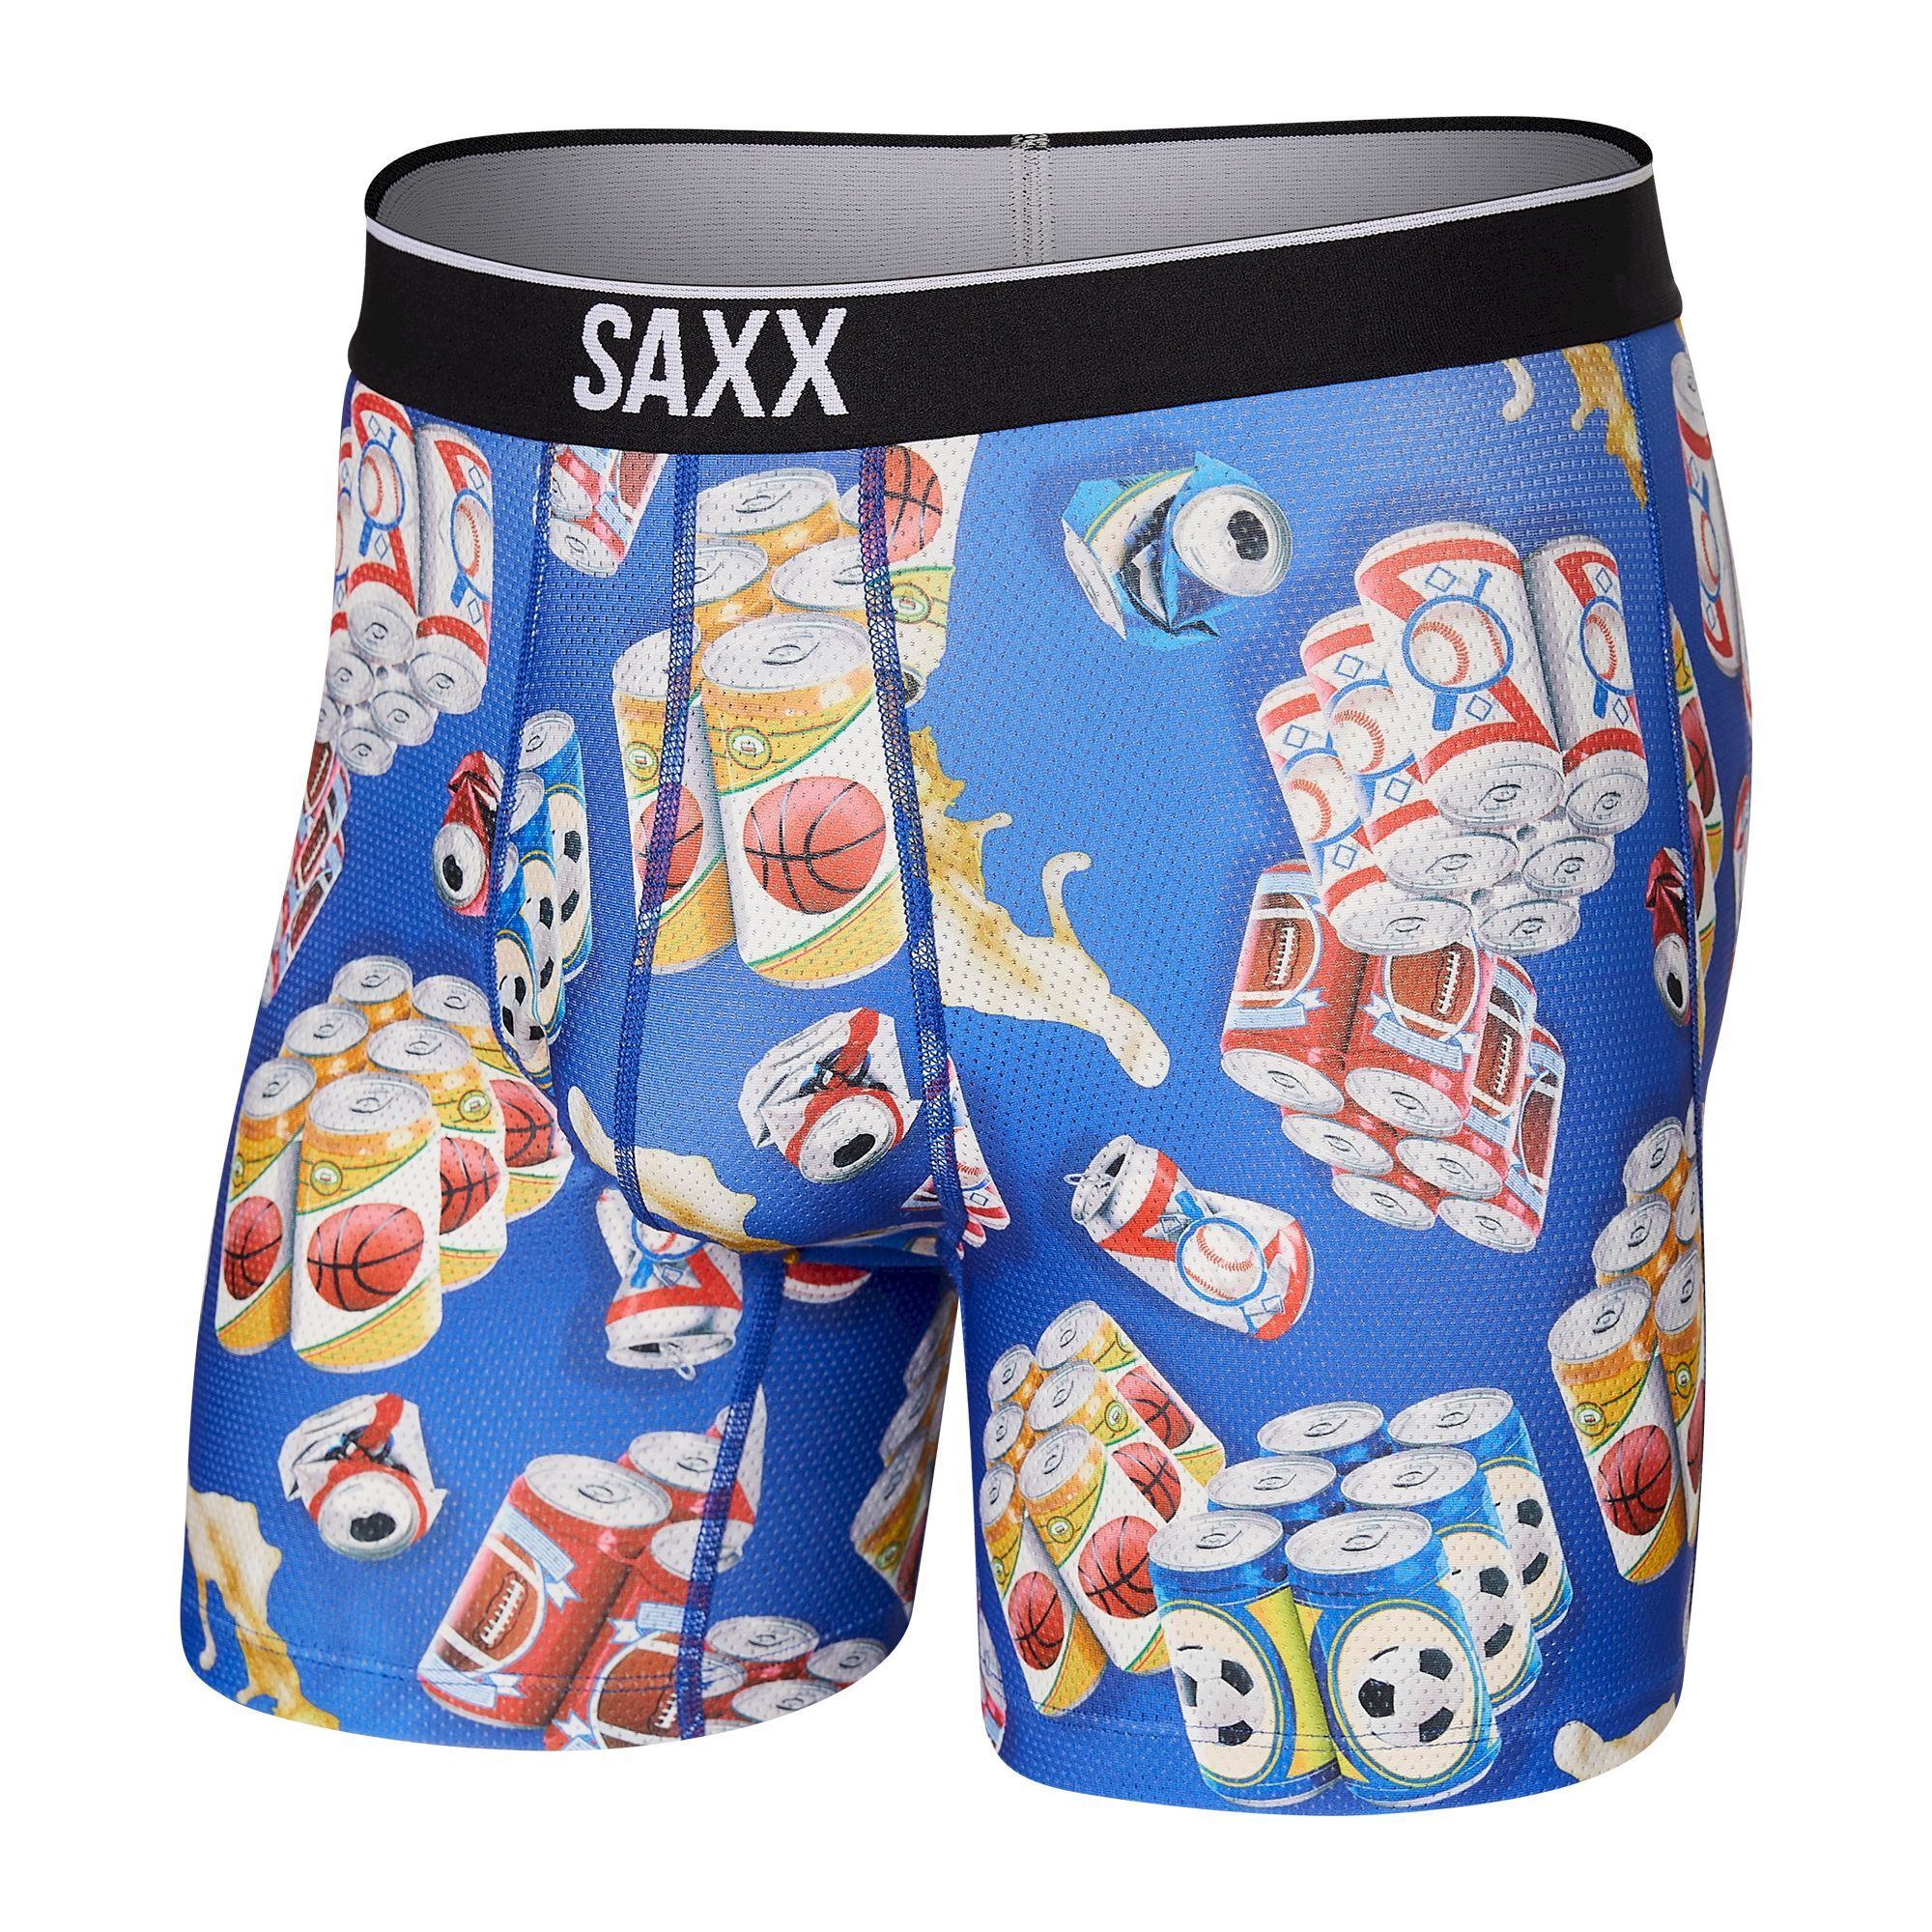 Saxx Volt Boxer Brief - Ropa interior - Hombre